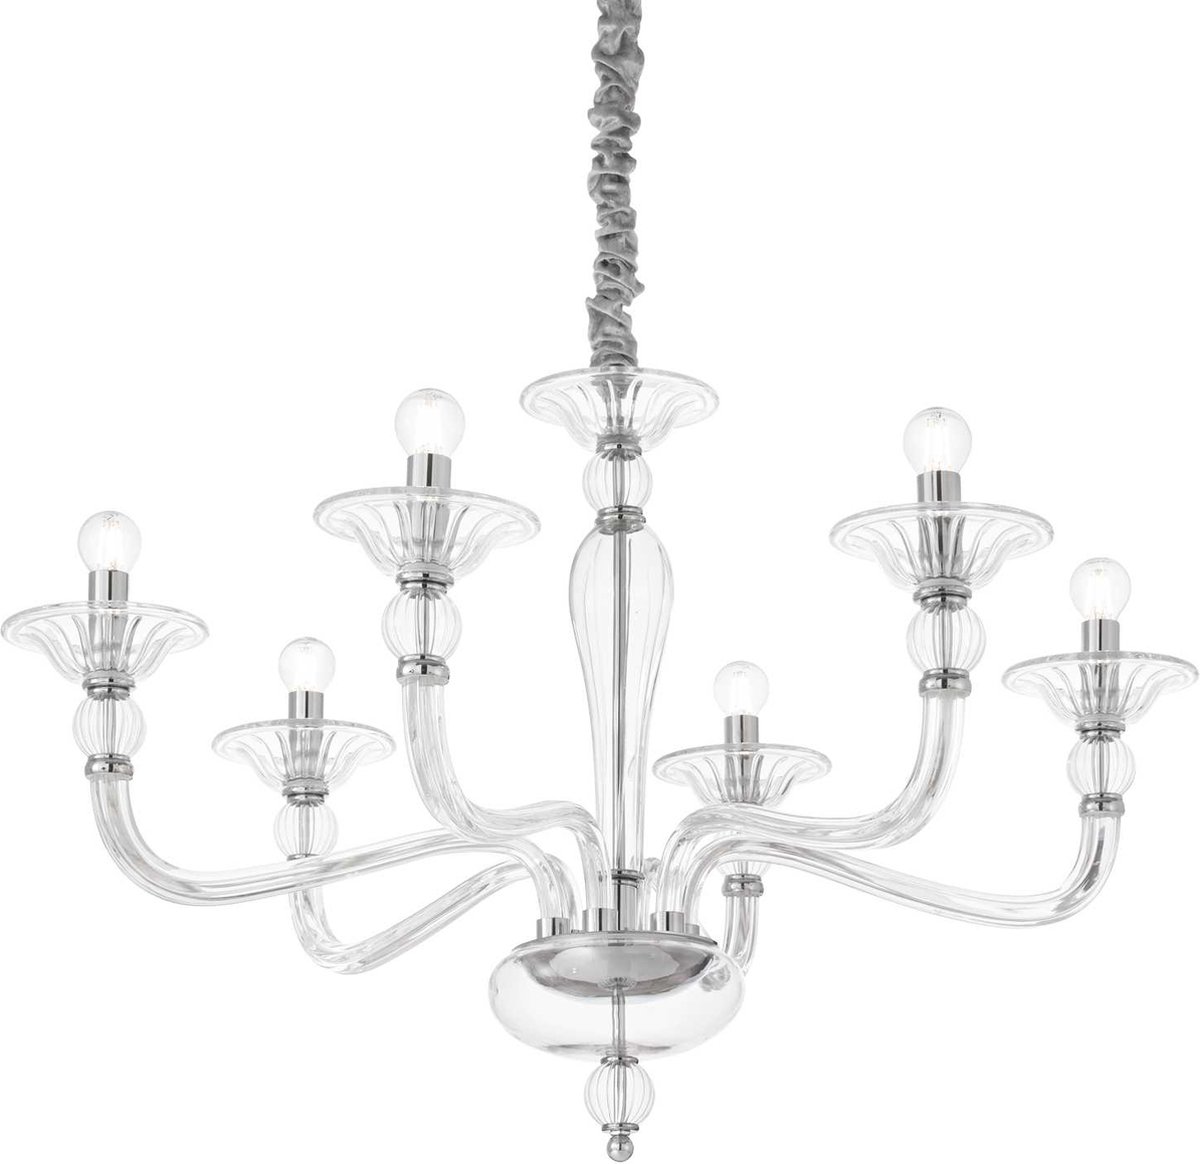 Ideal Your Lux - Hanglamp Modern - Glas - E14 - Voor Binnen - Lamp - Lampen - Woonkamer - Eetkamer - Slaapkamer - Chroom